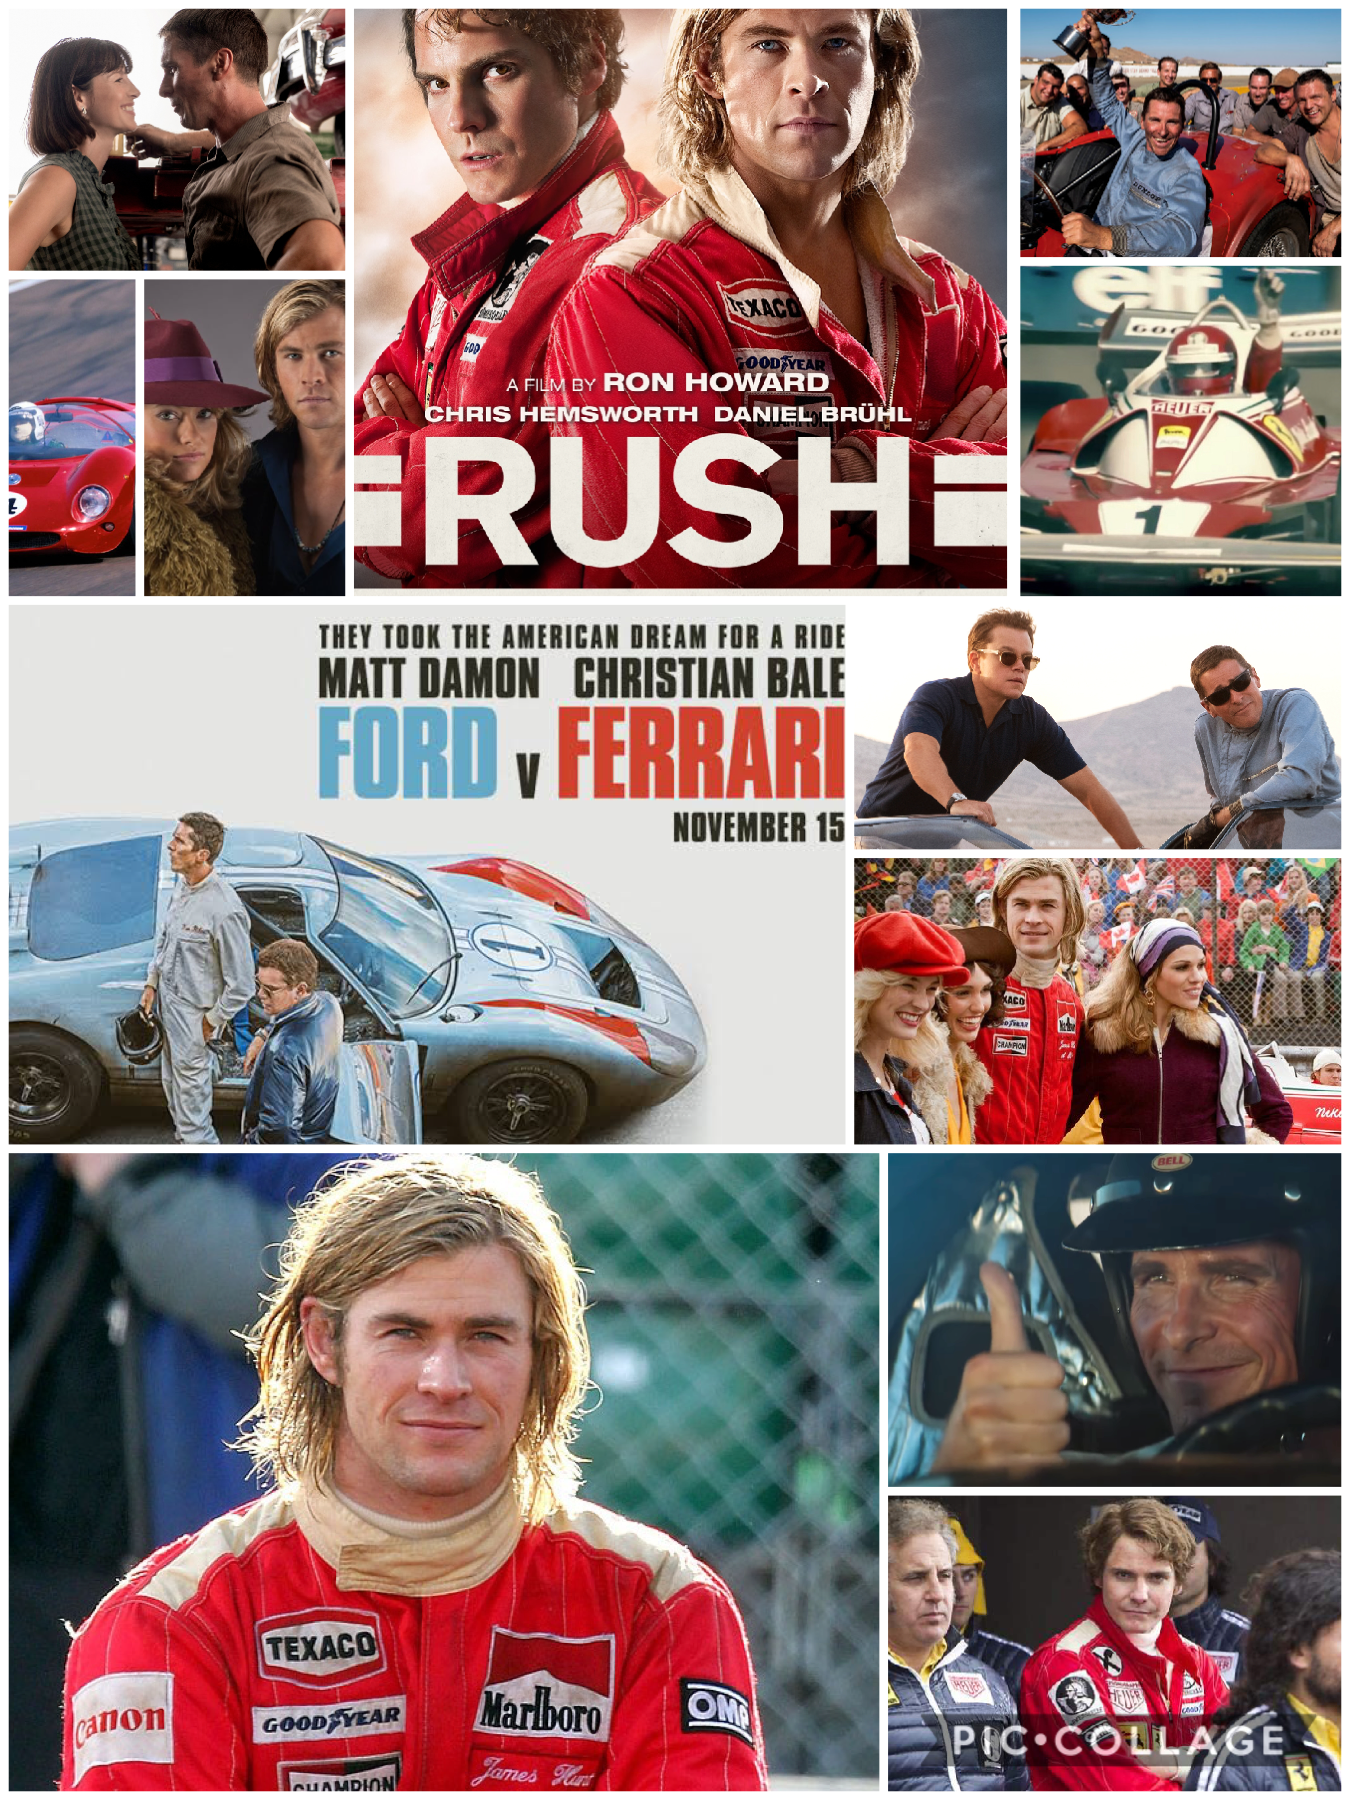 Ford V a Ferrari and Rush 